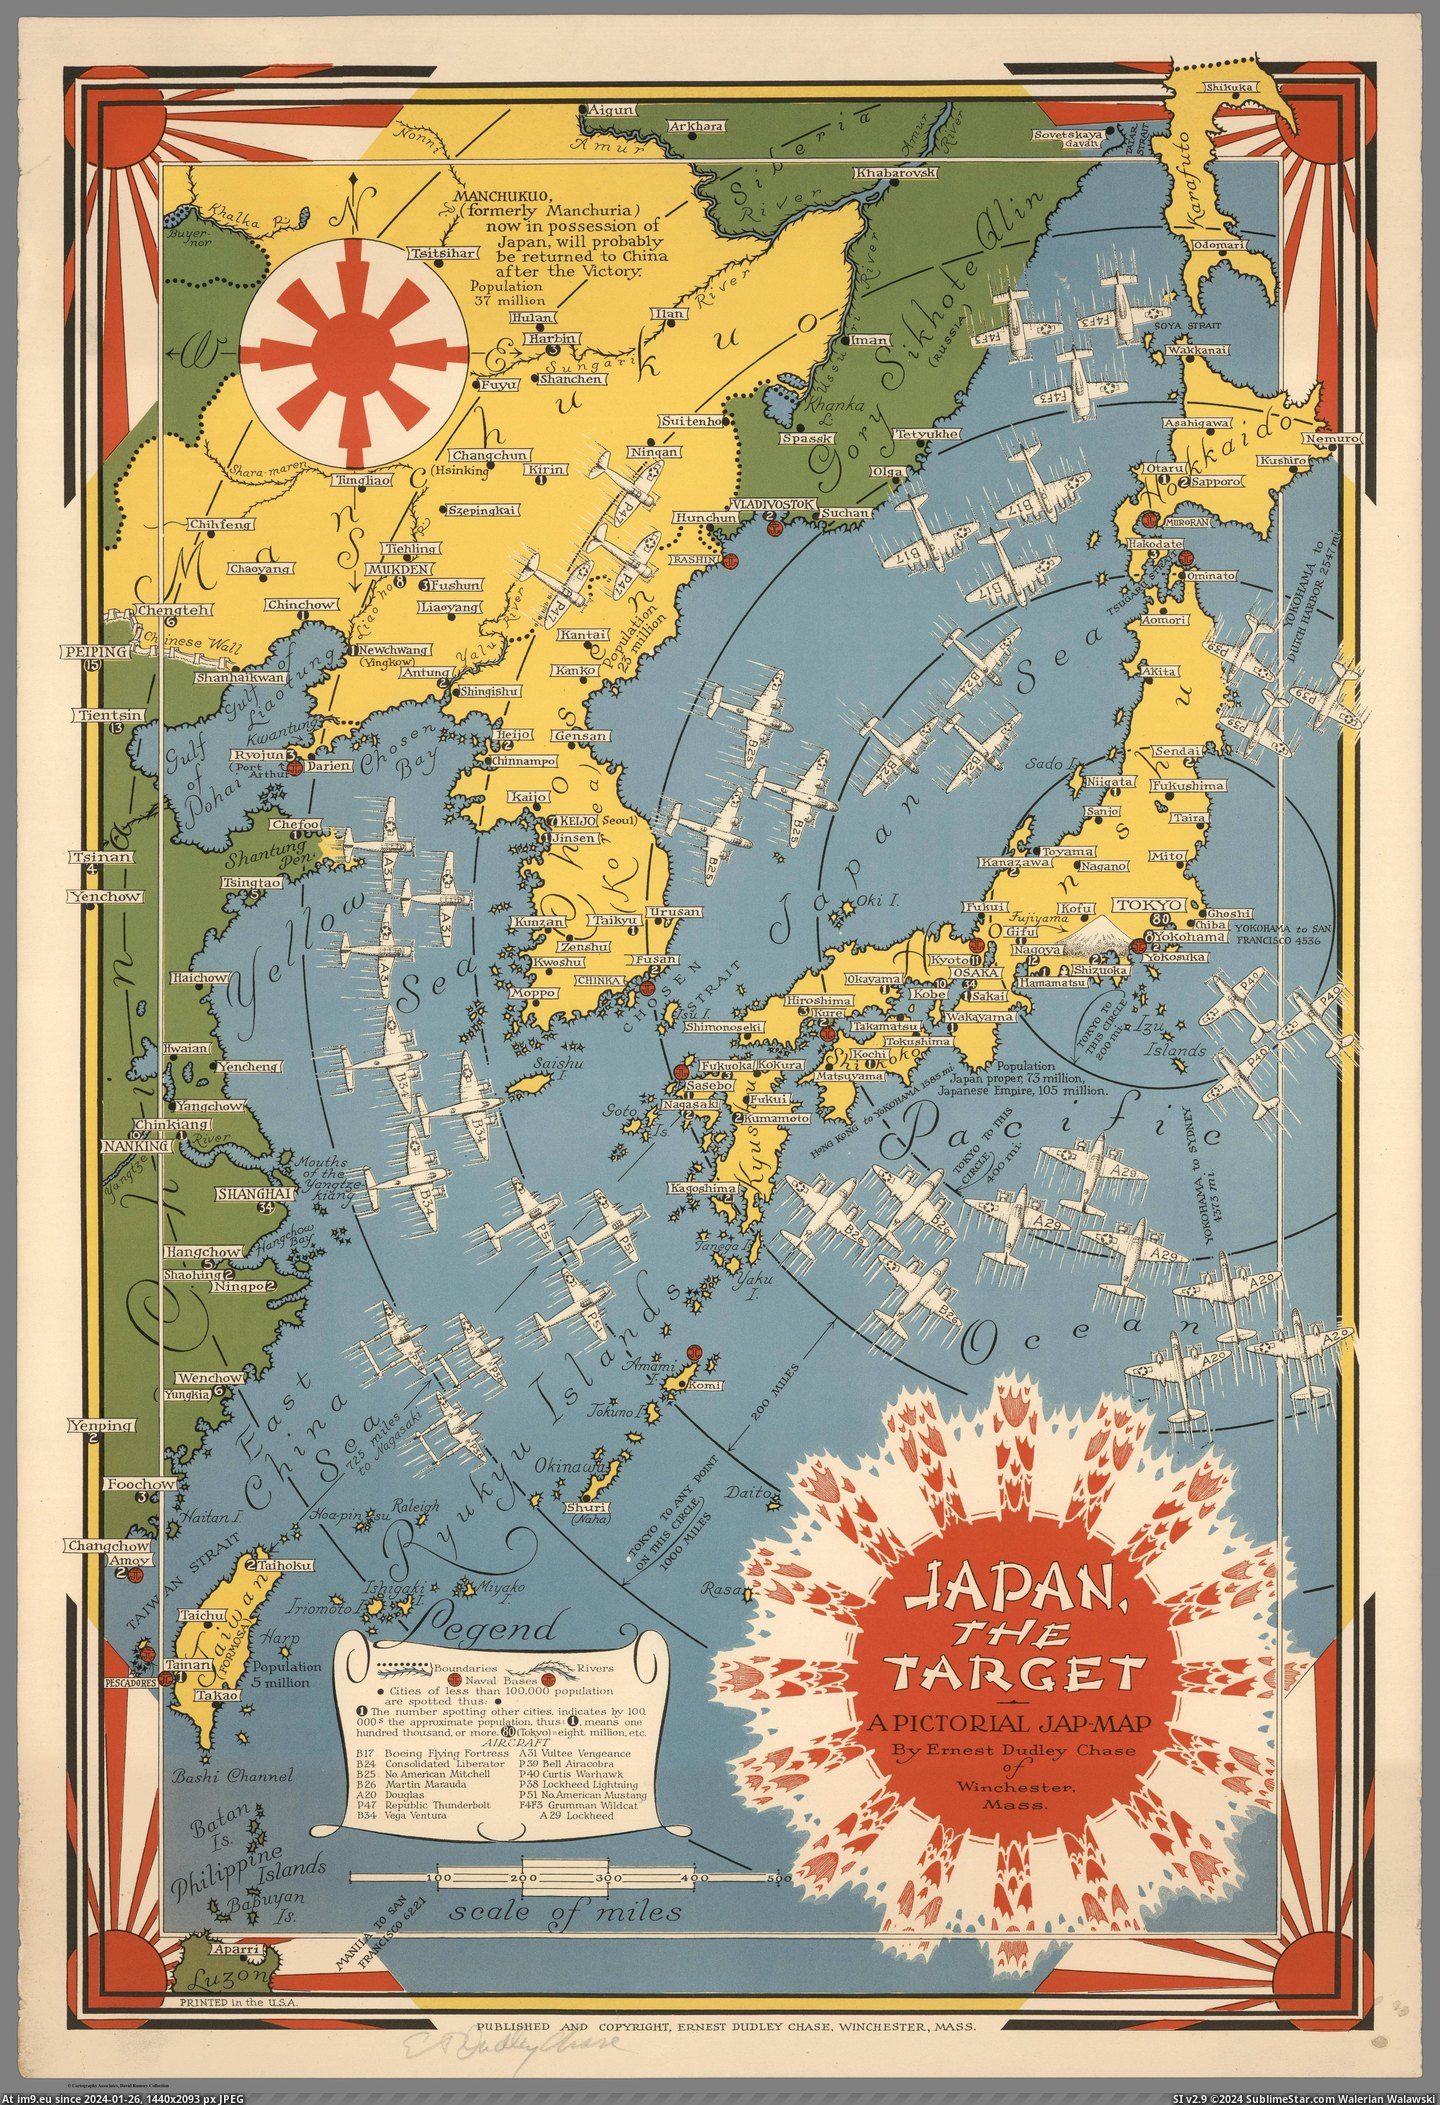 #Map #Japan #Ernest #Pictorial #Dudley #Chase #Target [Mapporn] Japan the Target, a pictorial map made by Ernest Dudley Chase, 1942 [4003x5830] Pic. (Bild von album My r/MAPS favs))